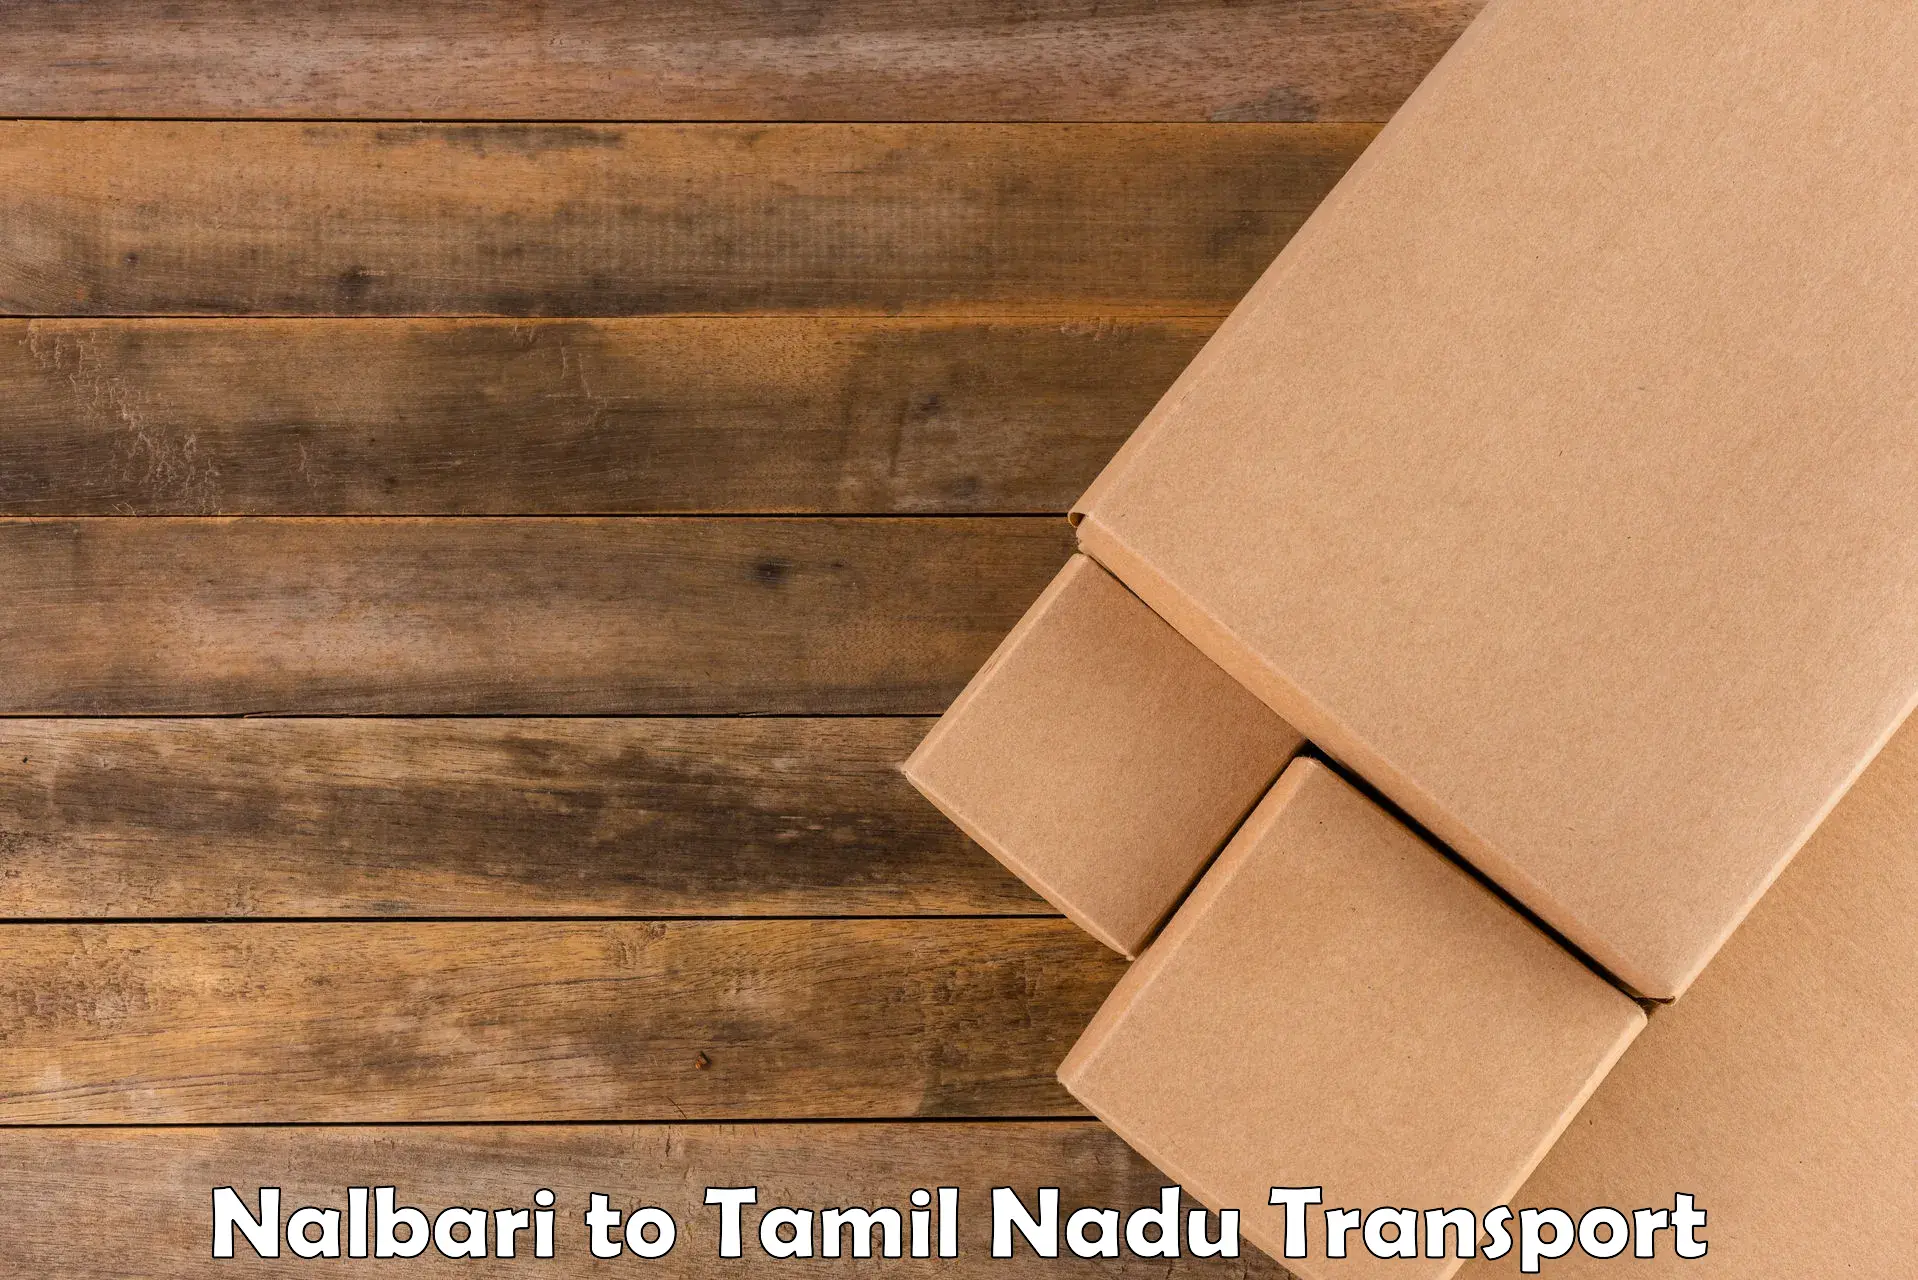 Nearest transport service Nalbari to Villupuram